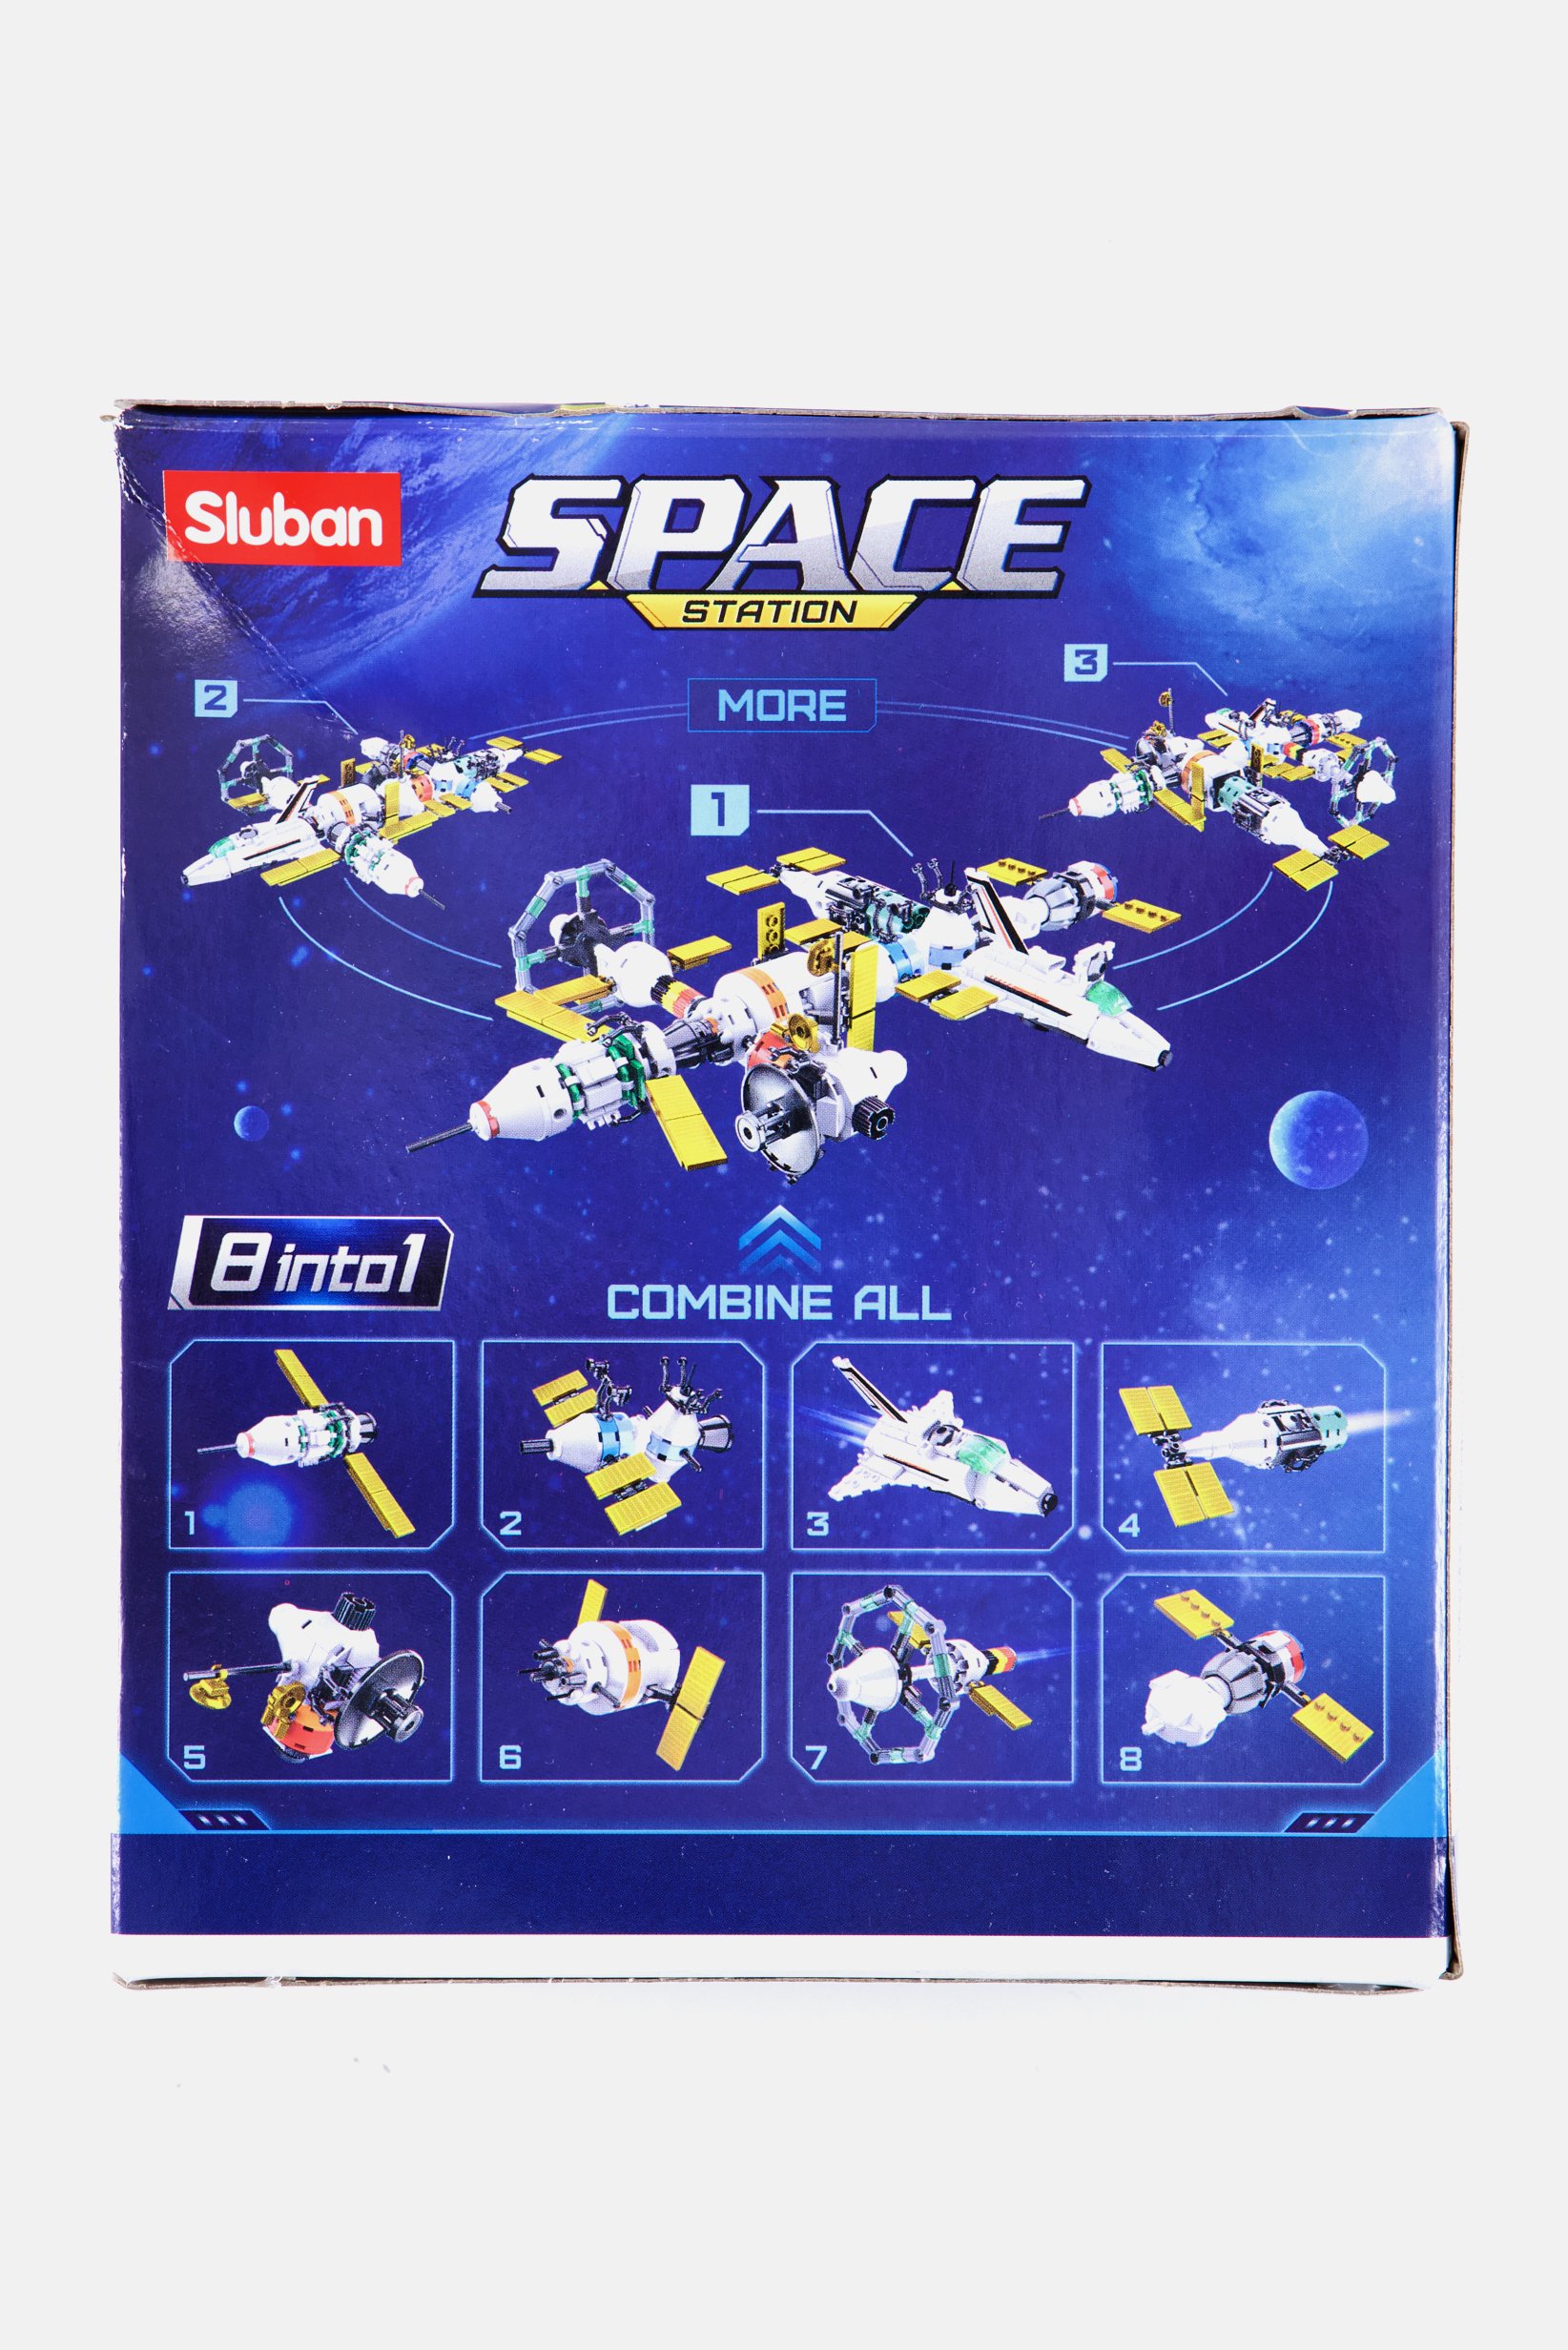 Sluban 62 Pcs Space Station, Space Probe, 8 In 1, Kit, Terminal Blocks, White Combo